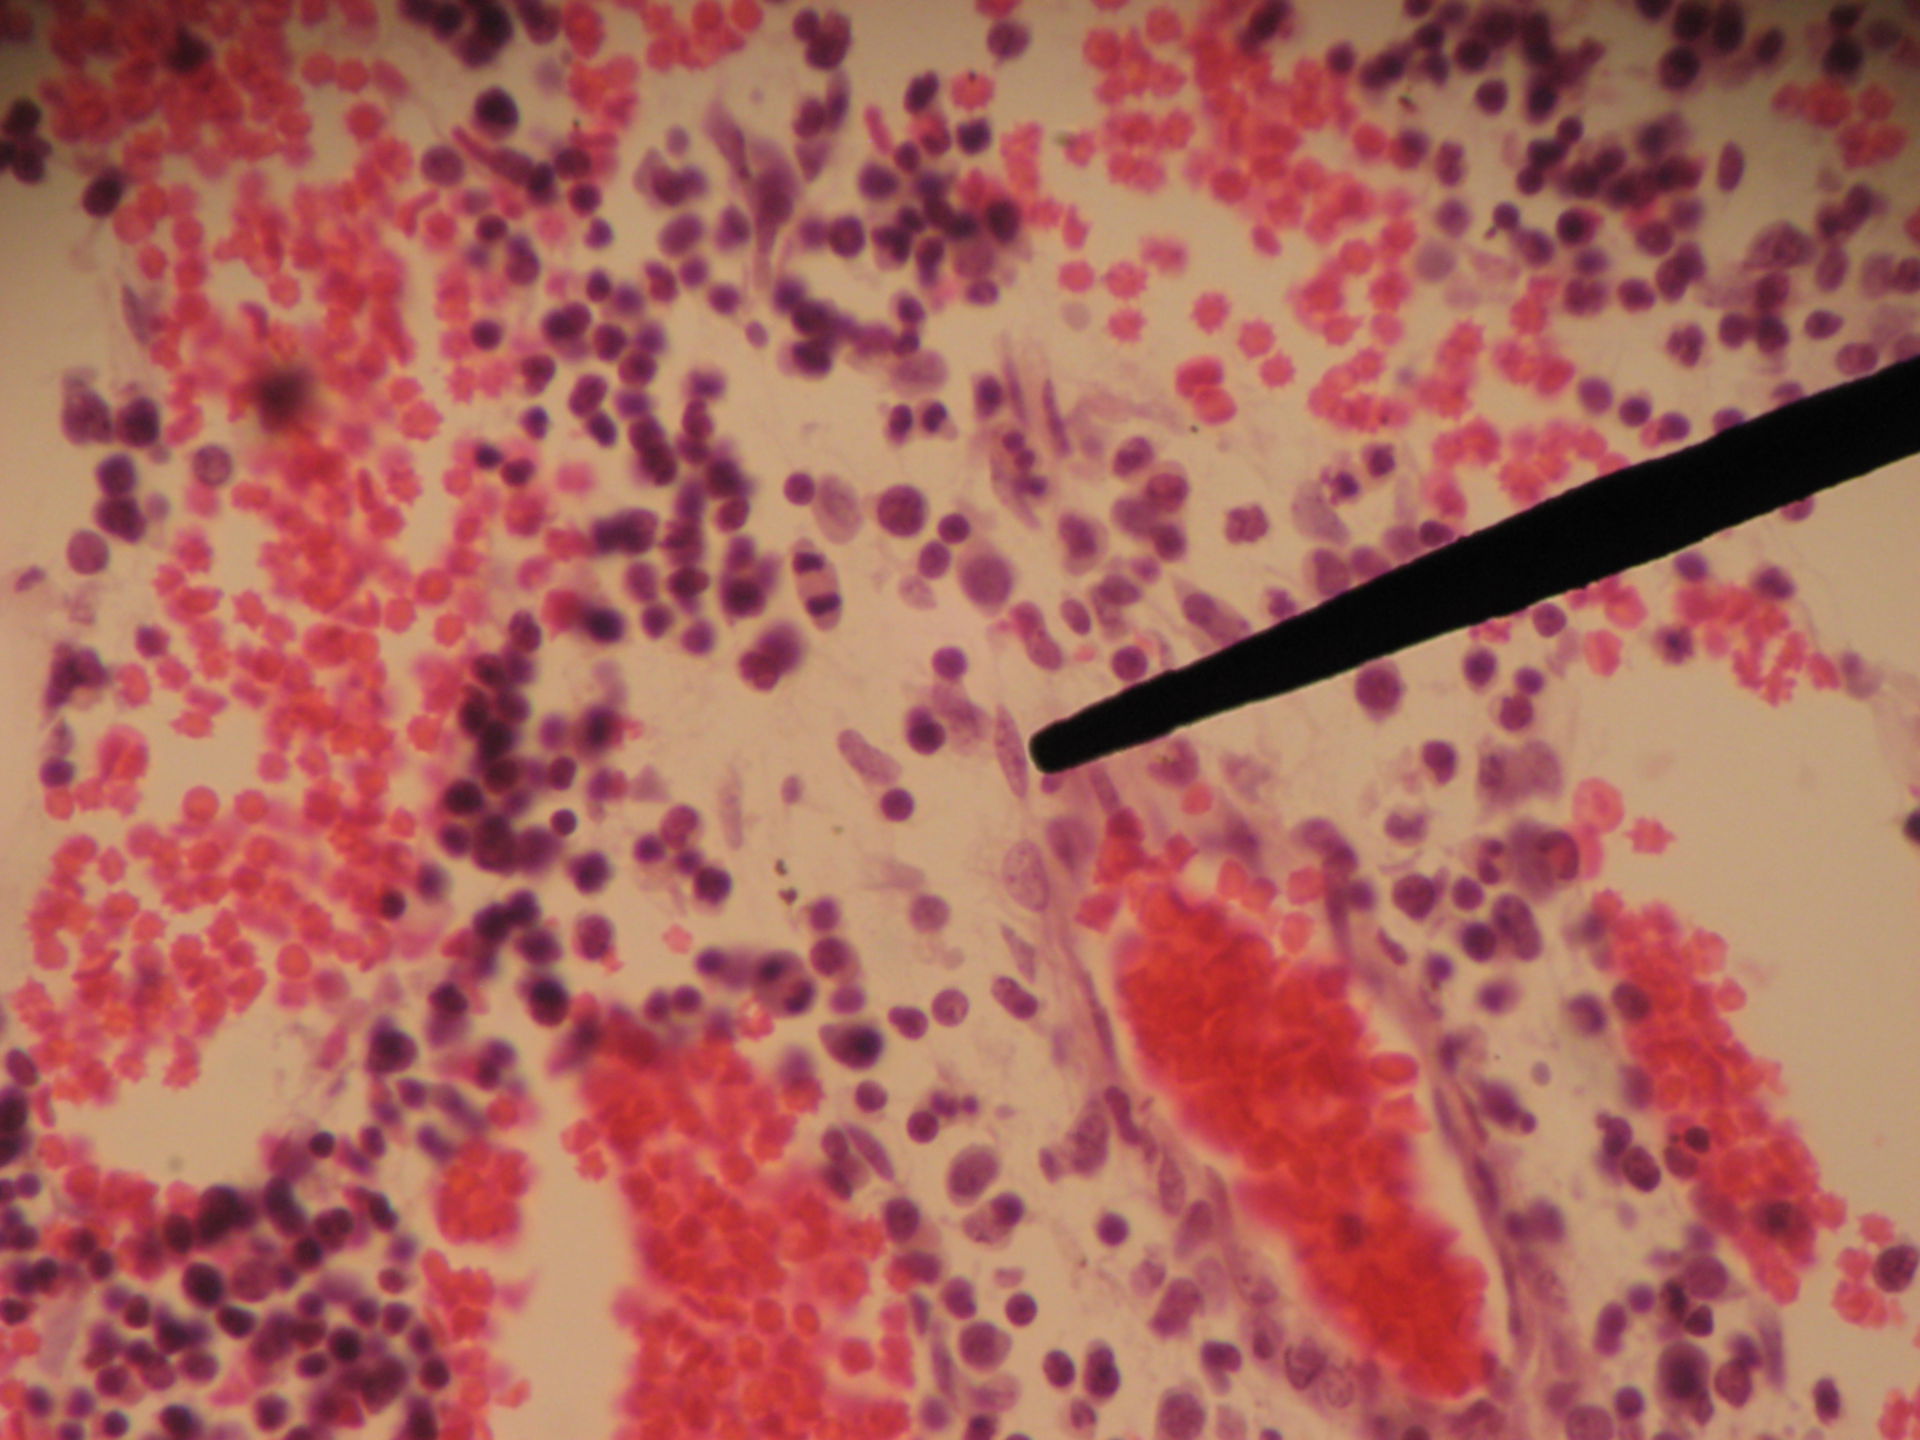 Red bone marrow of a pig fetus (9) - Reticulum cell